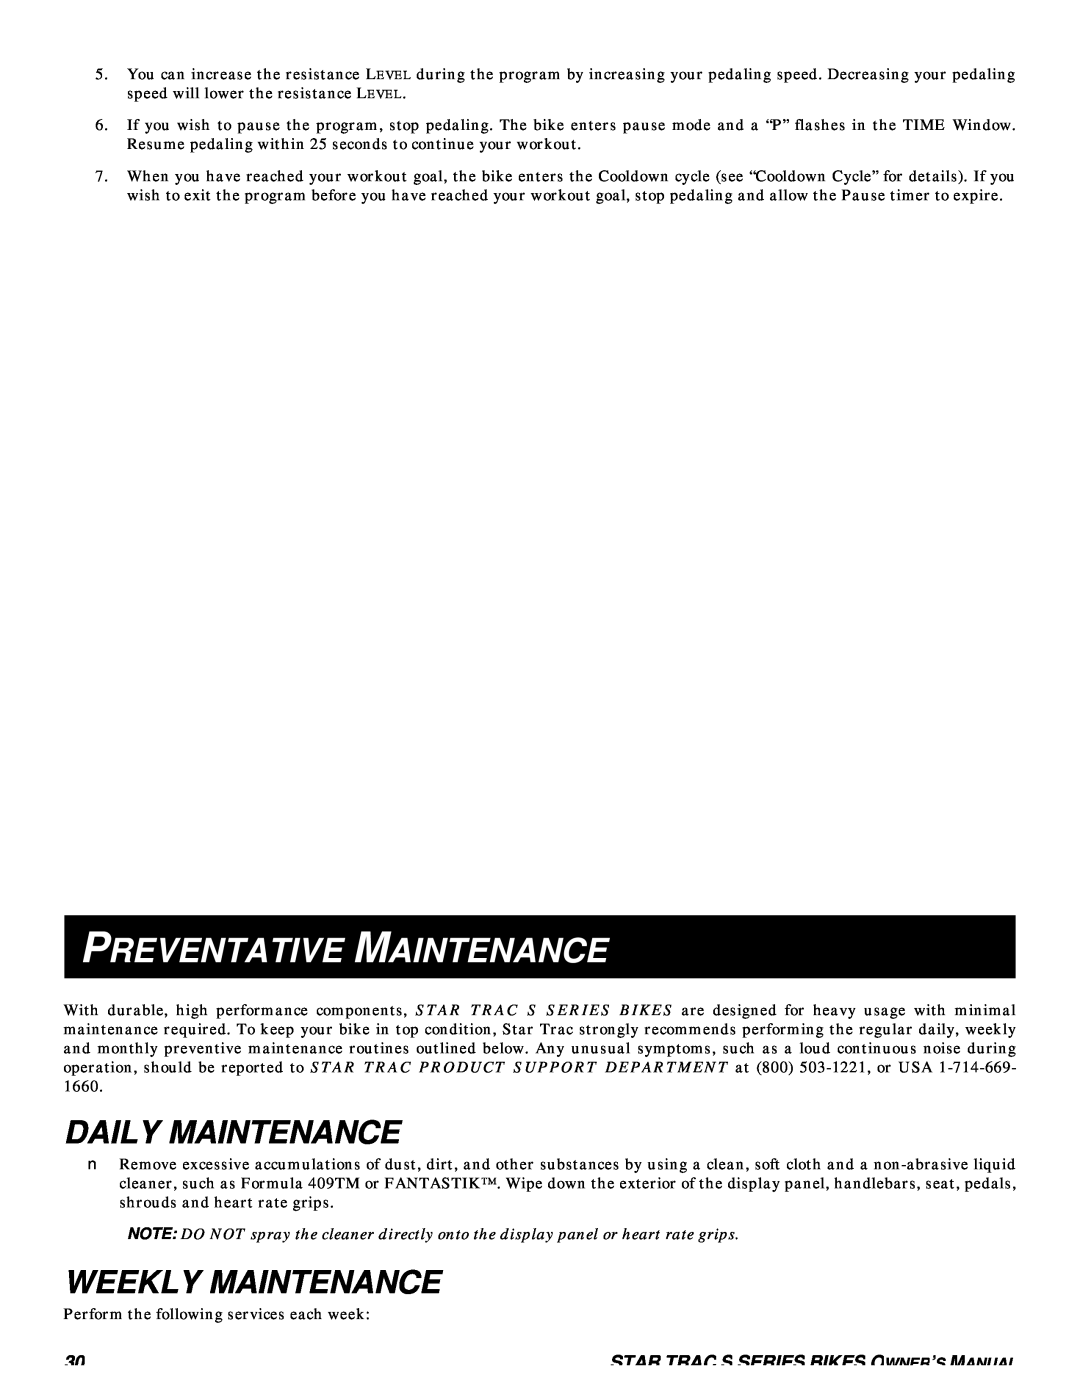 Star Trac S-RBX RECUMBENT BIKE, S-UBX UPRIGHT BIKE manual Preventative Maintenance, Daily Maintenance, Weekly Maintenance 